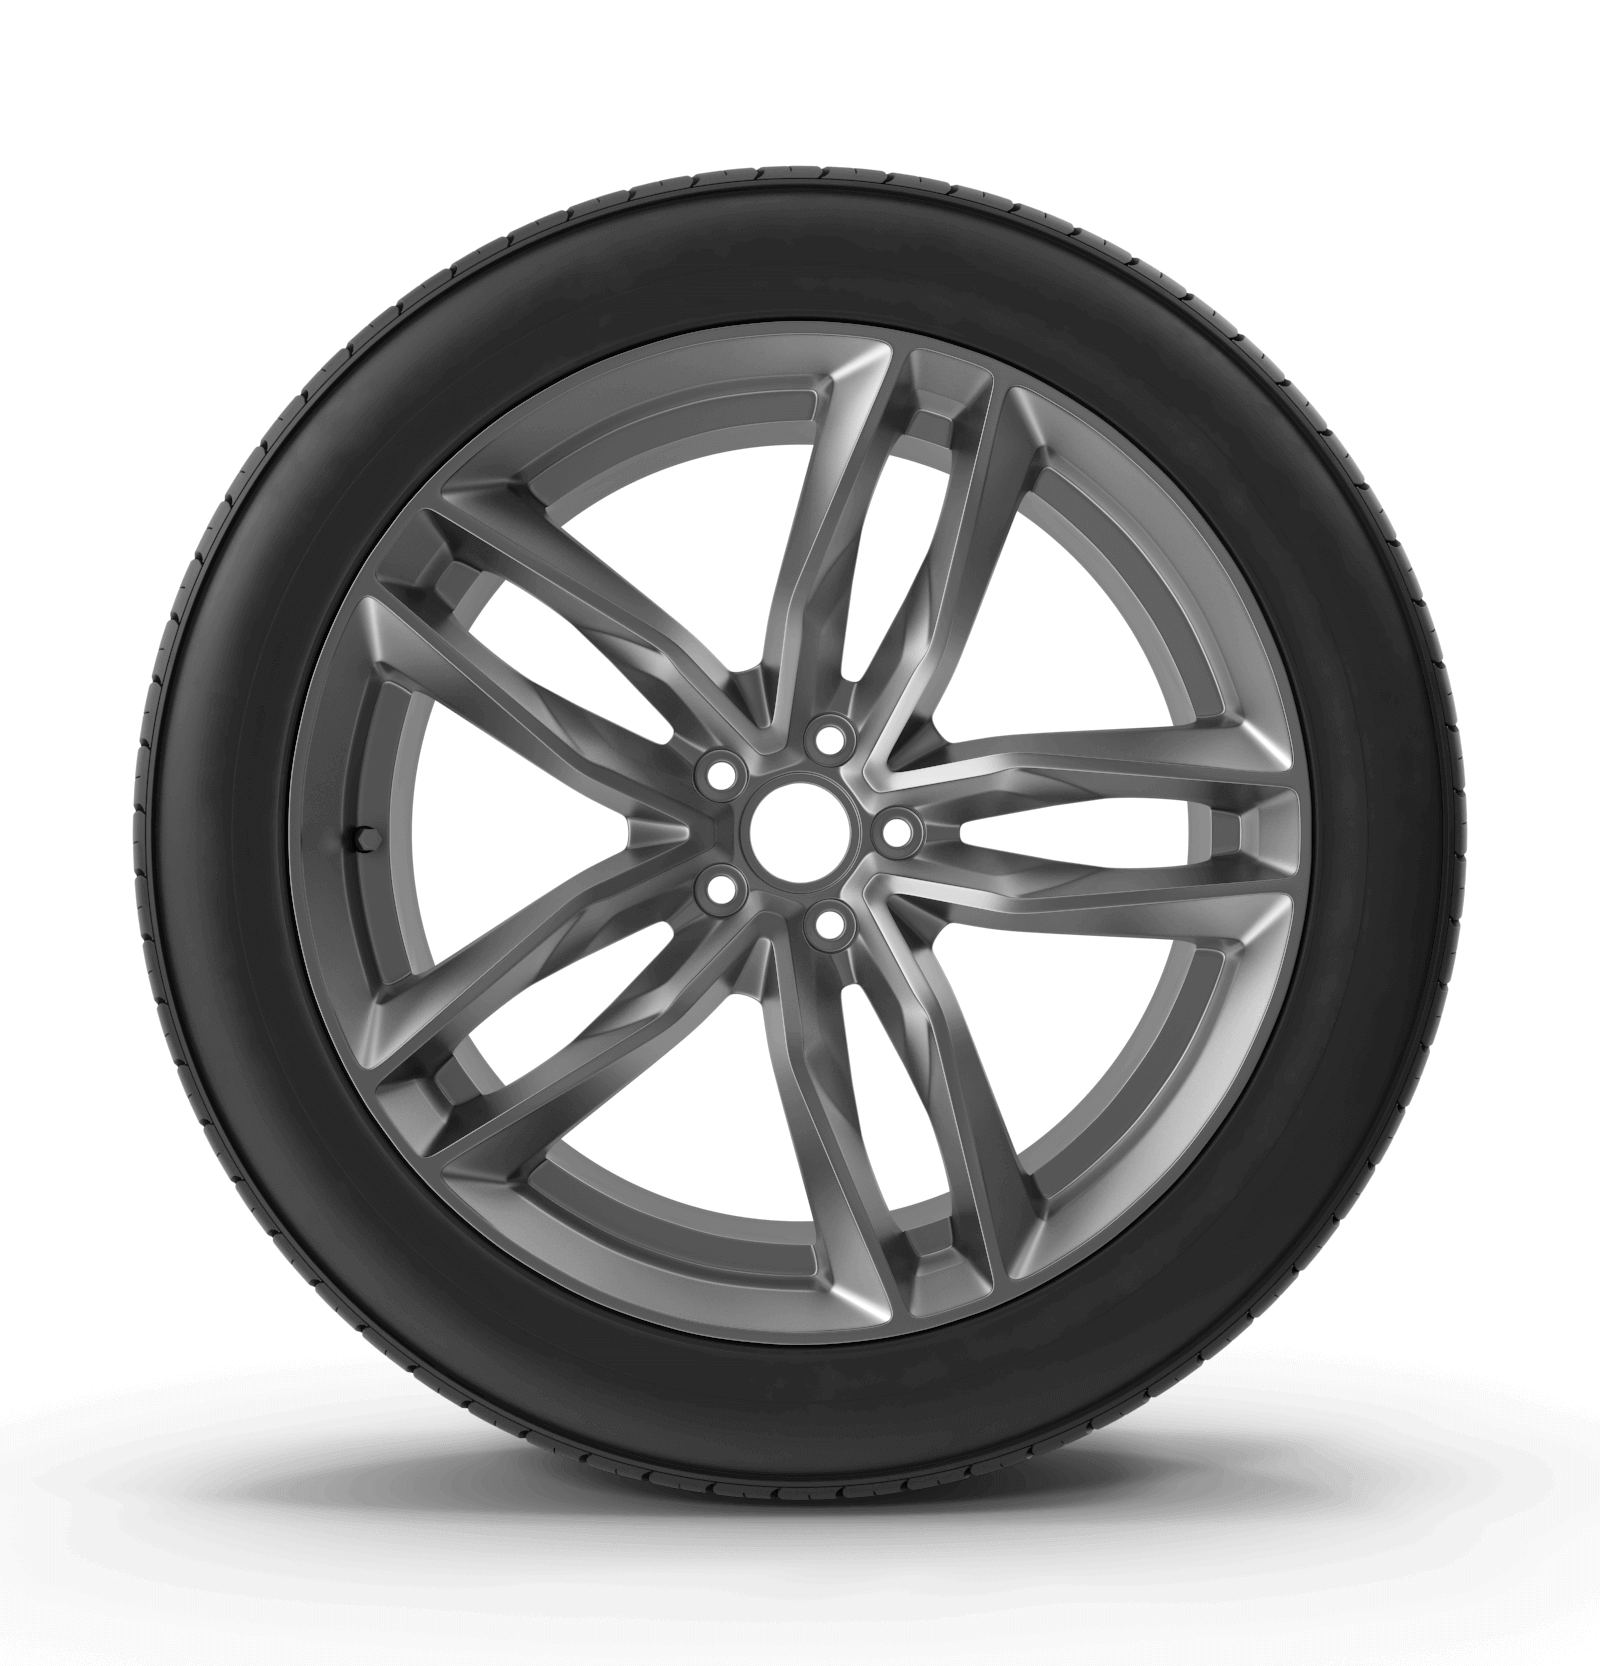 Radar Car Tire.I01.2k 1 1